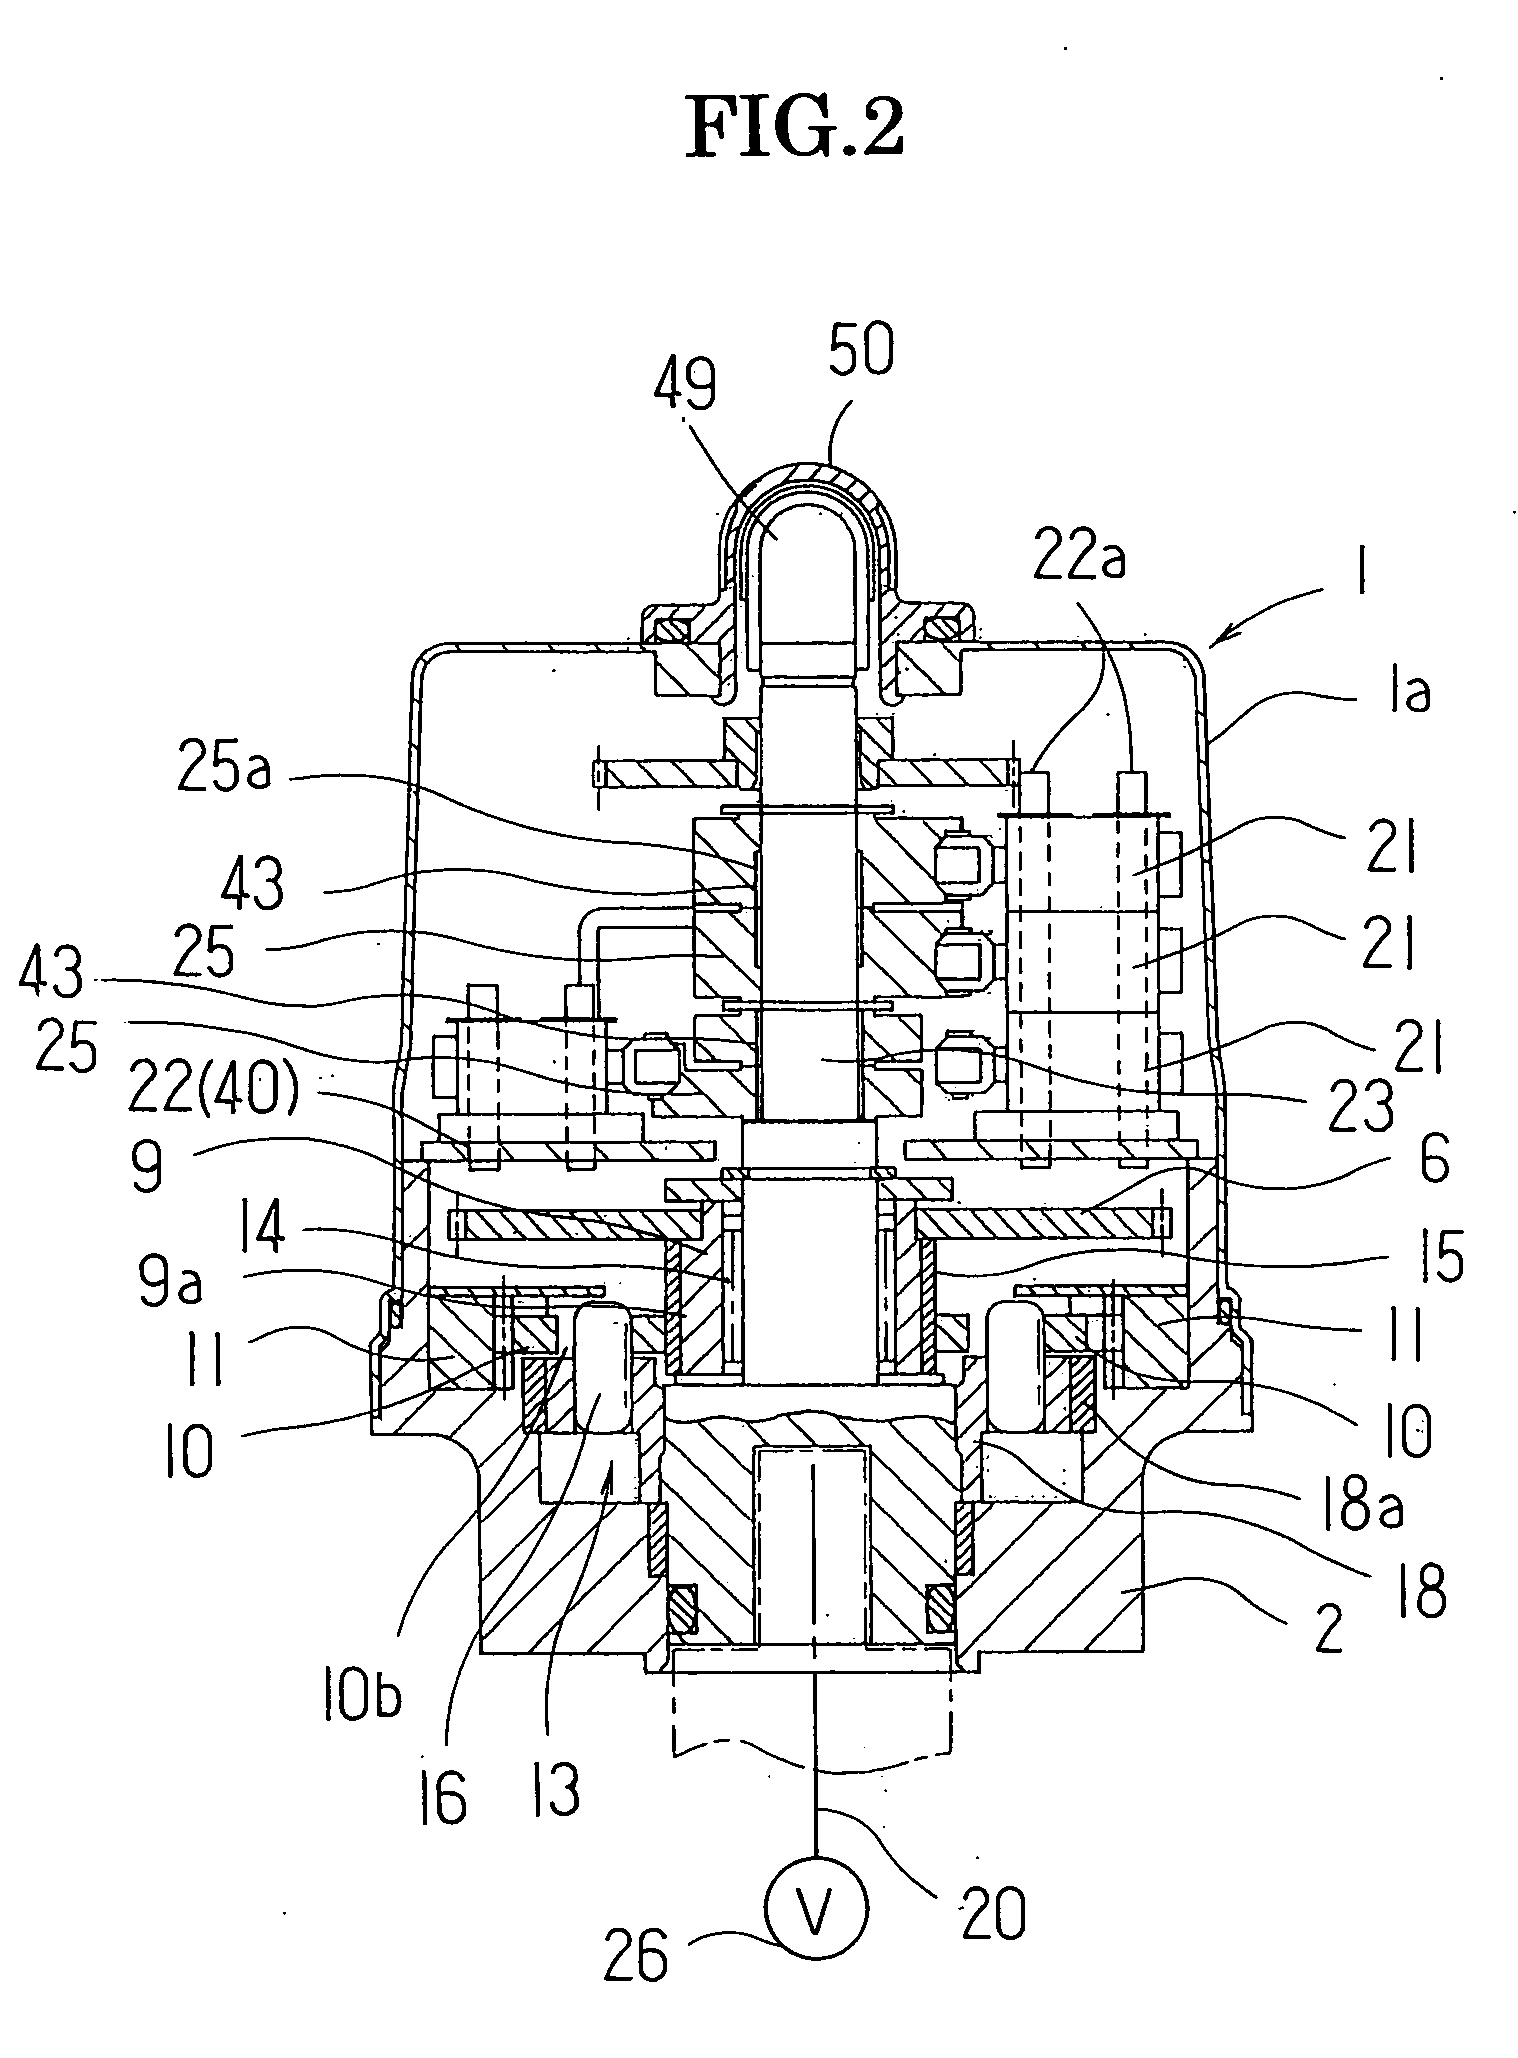 Actuator for valve